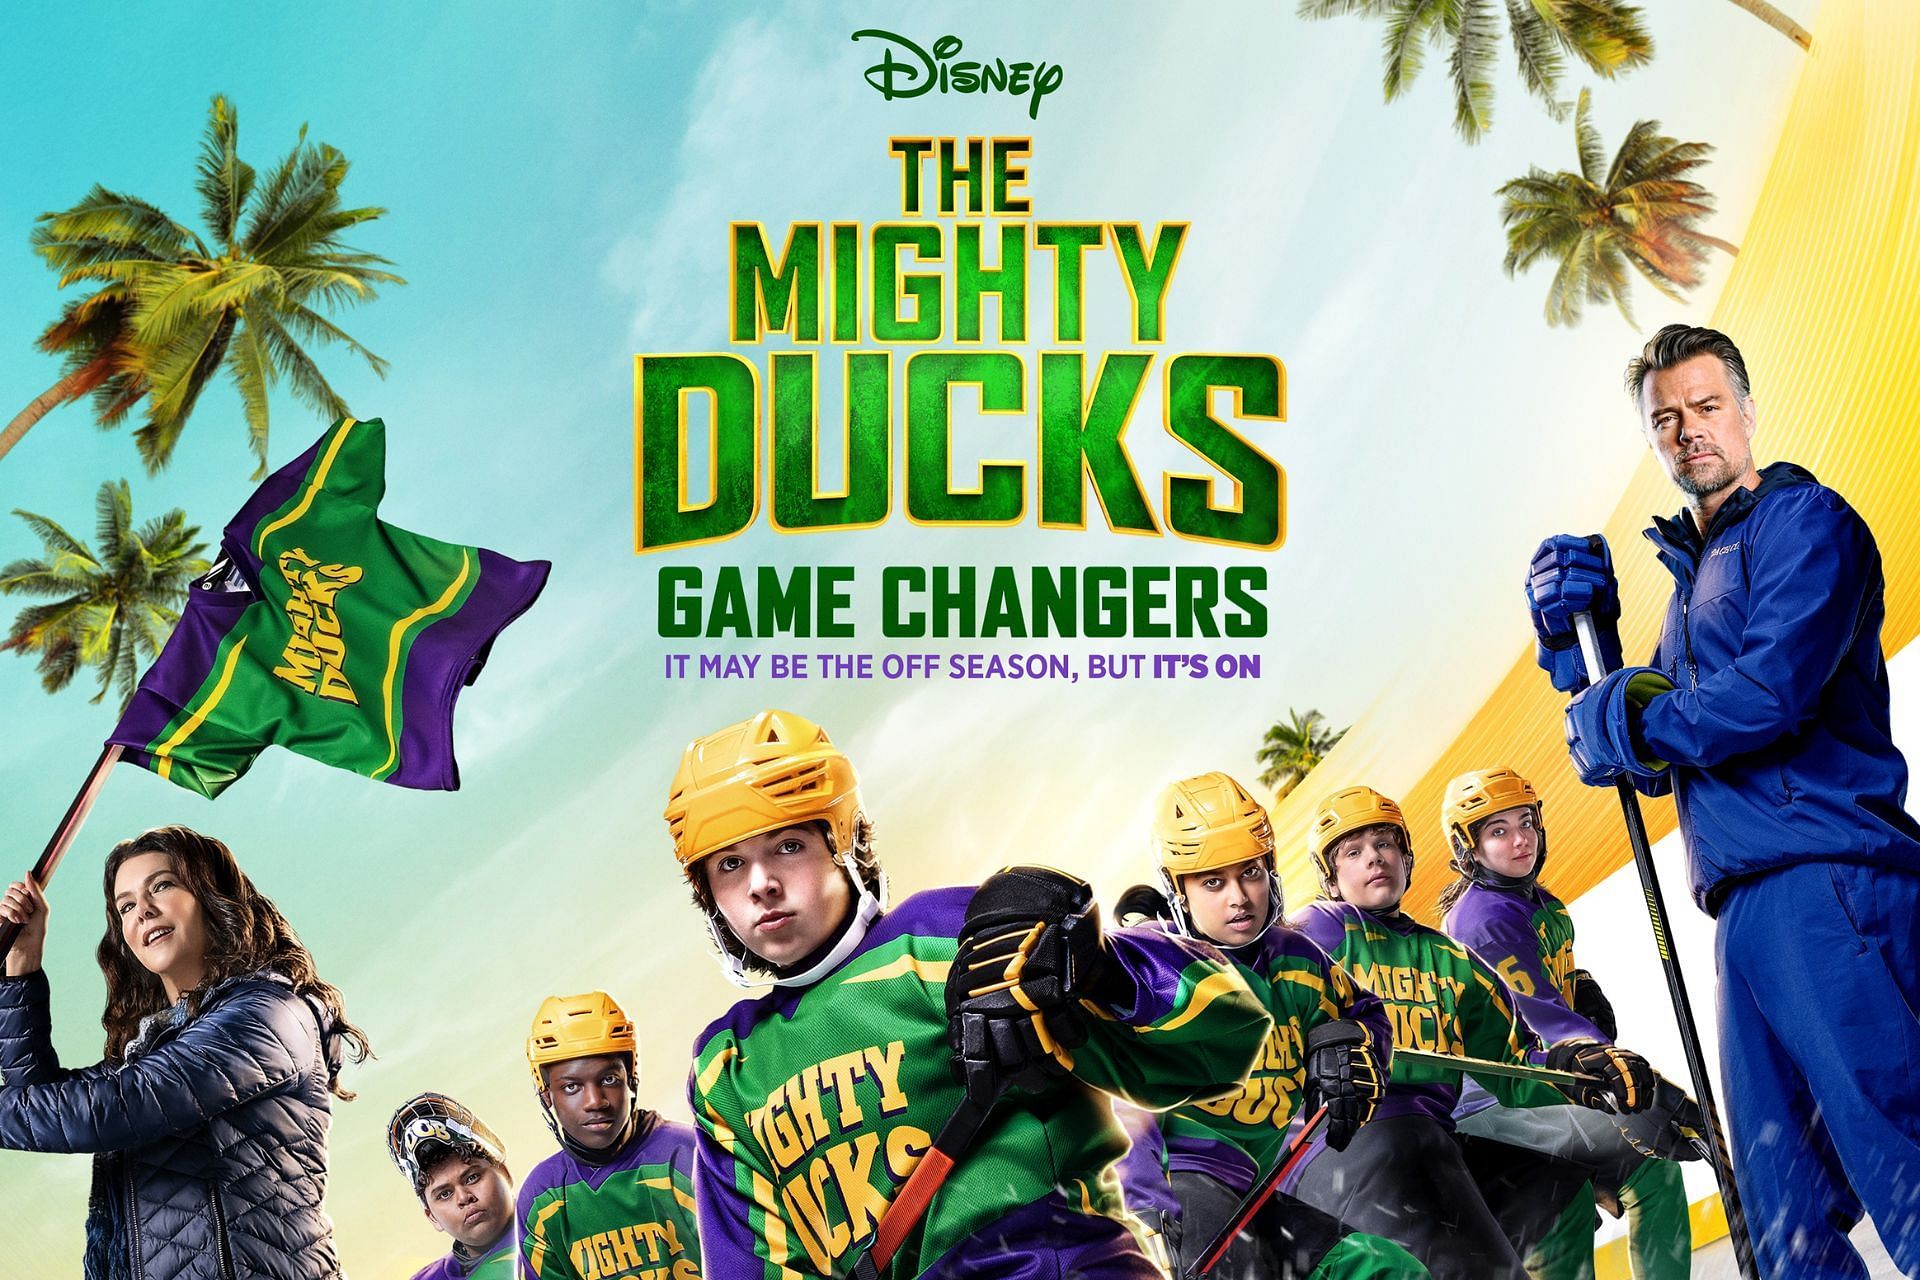 Mighty Ducks: Game Changers' Casts Josh Duhamel in Season 2